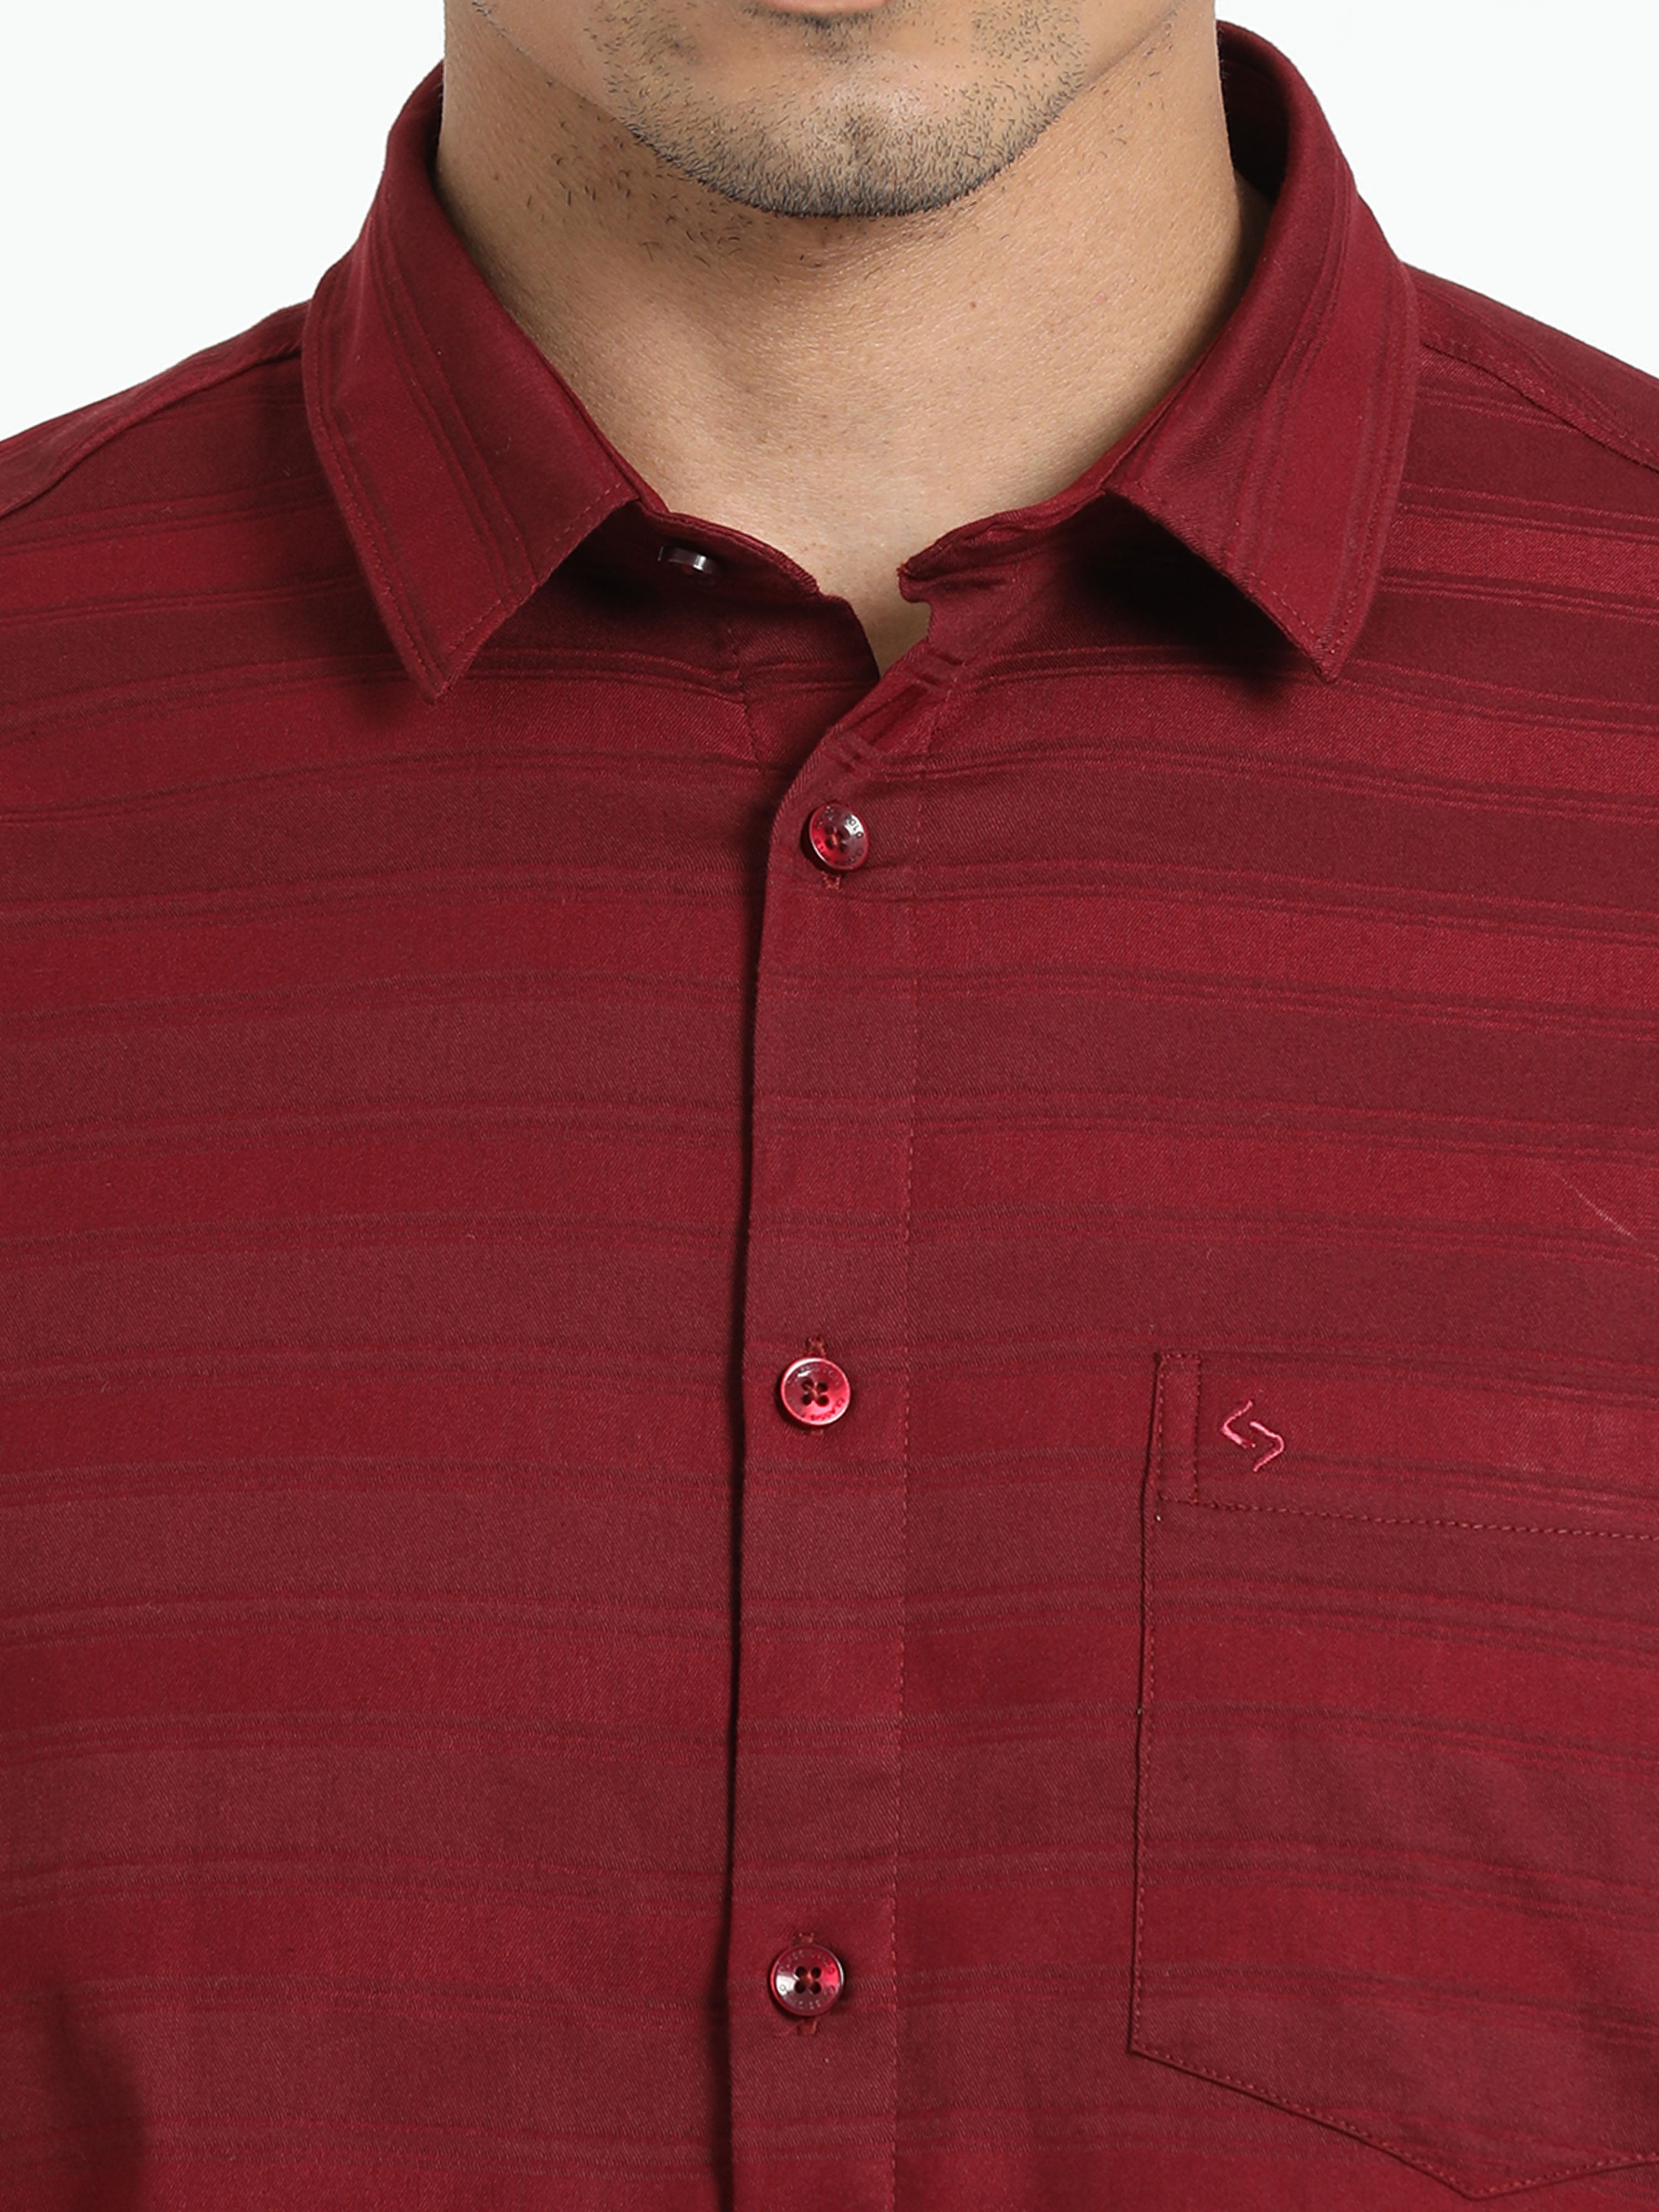 Classic Polo Men's Checked Maroon Cotton Full Sleeve Woven Shirt | SO2-131 C-FS-CHK-SF